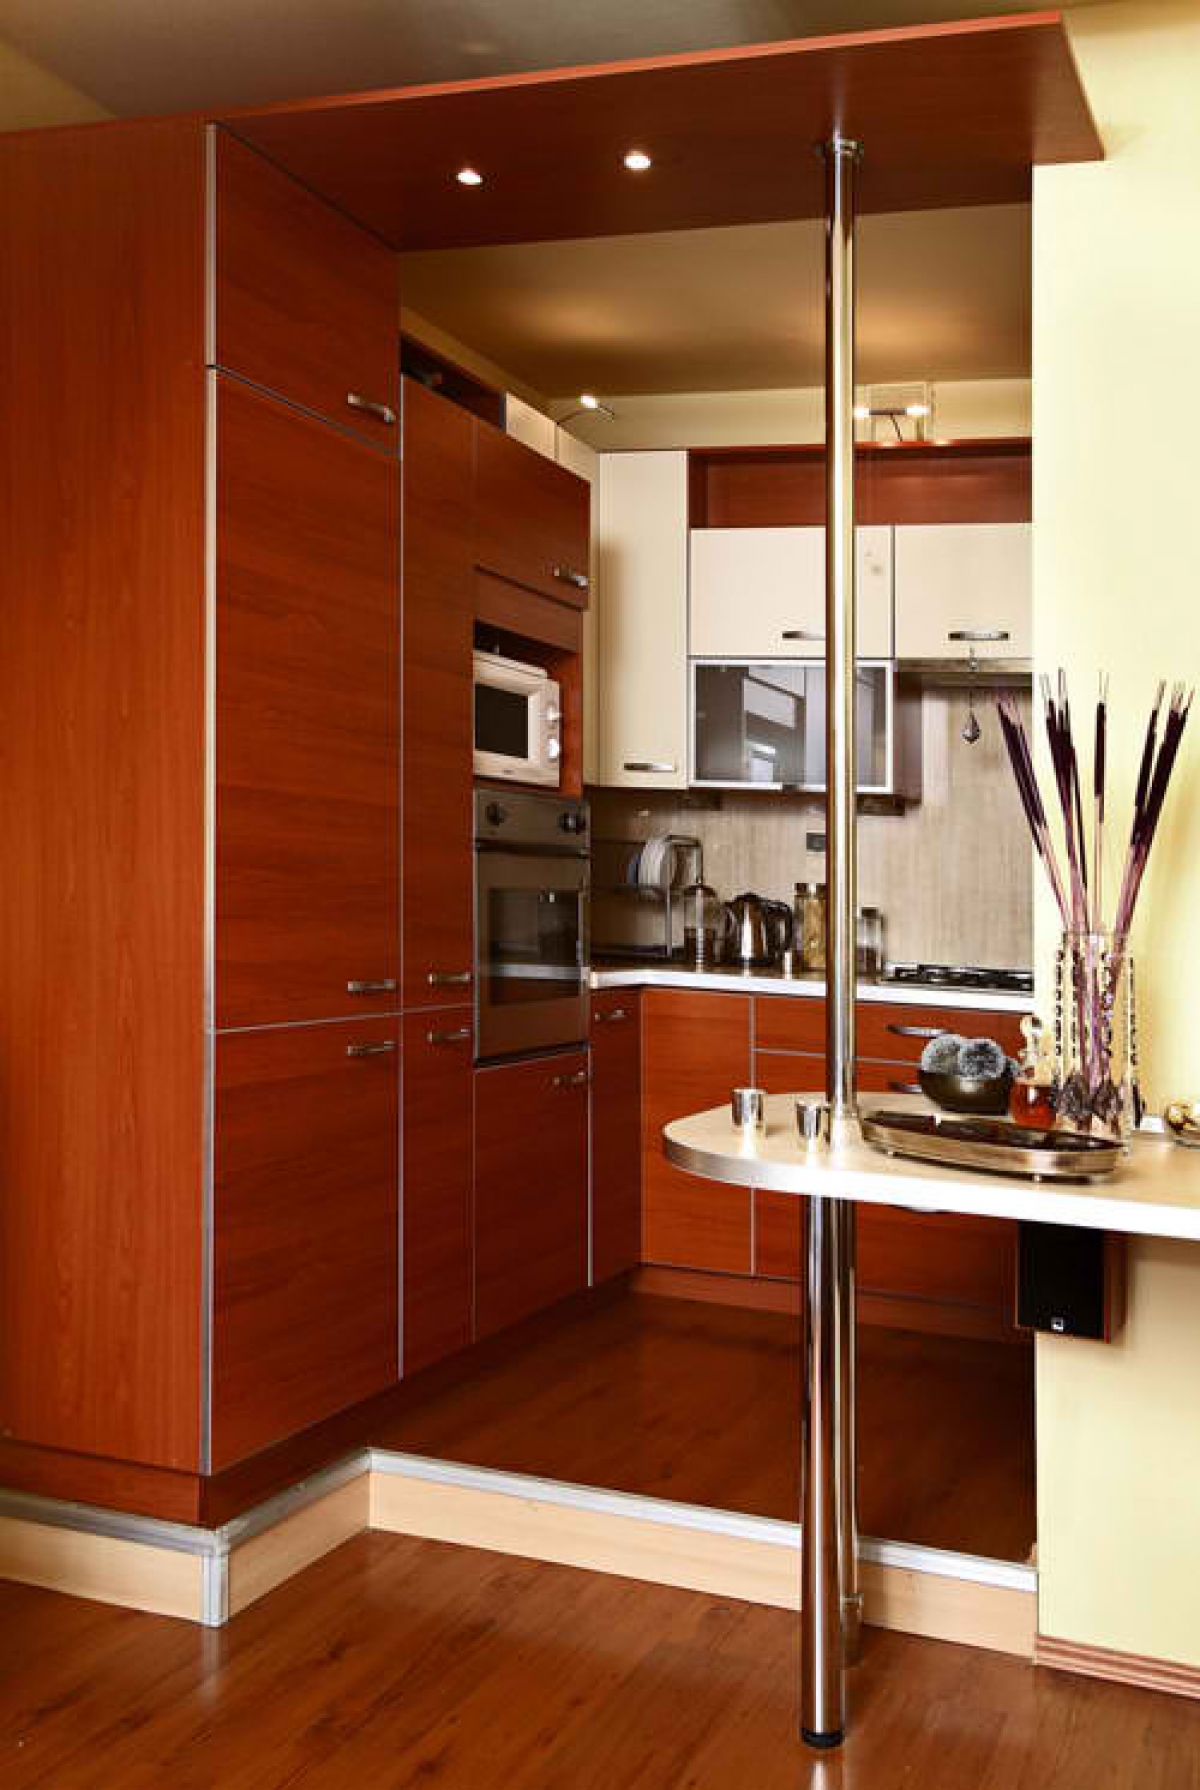 Smart and stylish kitchen design ideas - Photo 1.